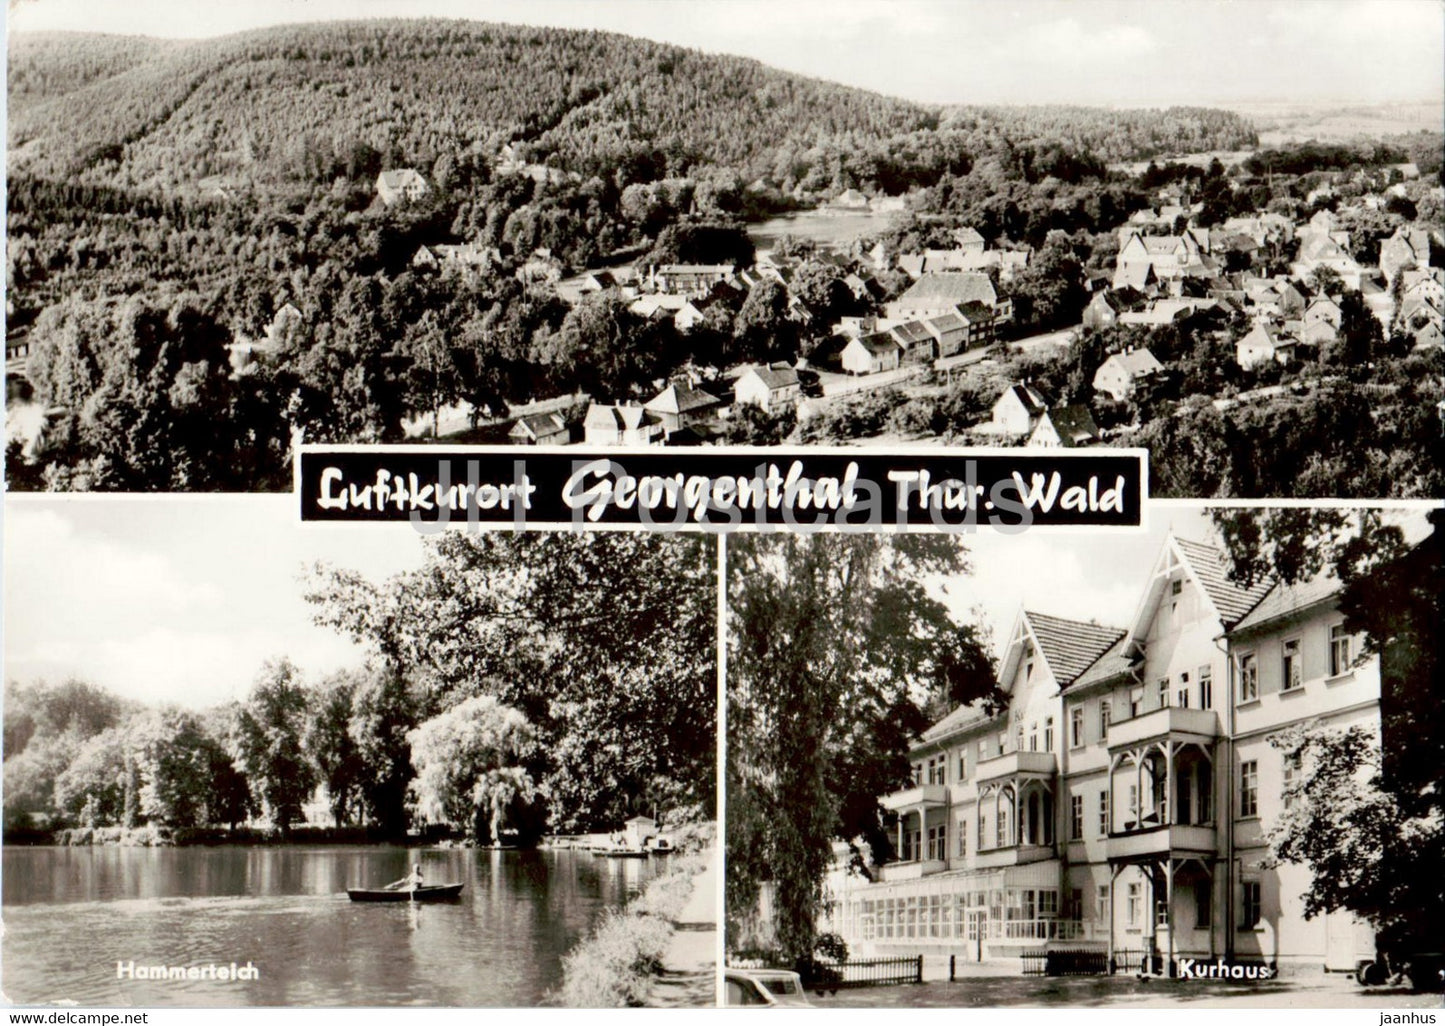 Luftkurort Georgenthal - Thur Wald - Hammerteich - Kurhaus - 1978 - Germany DDR - used - JH Postcards